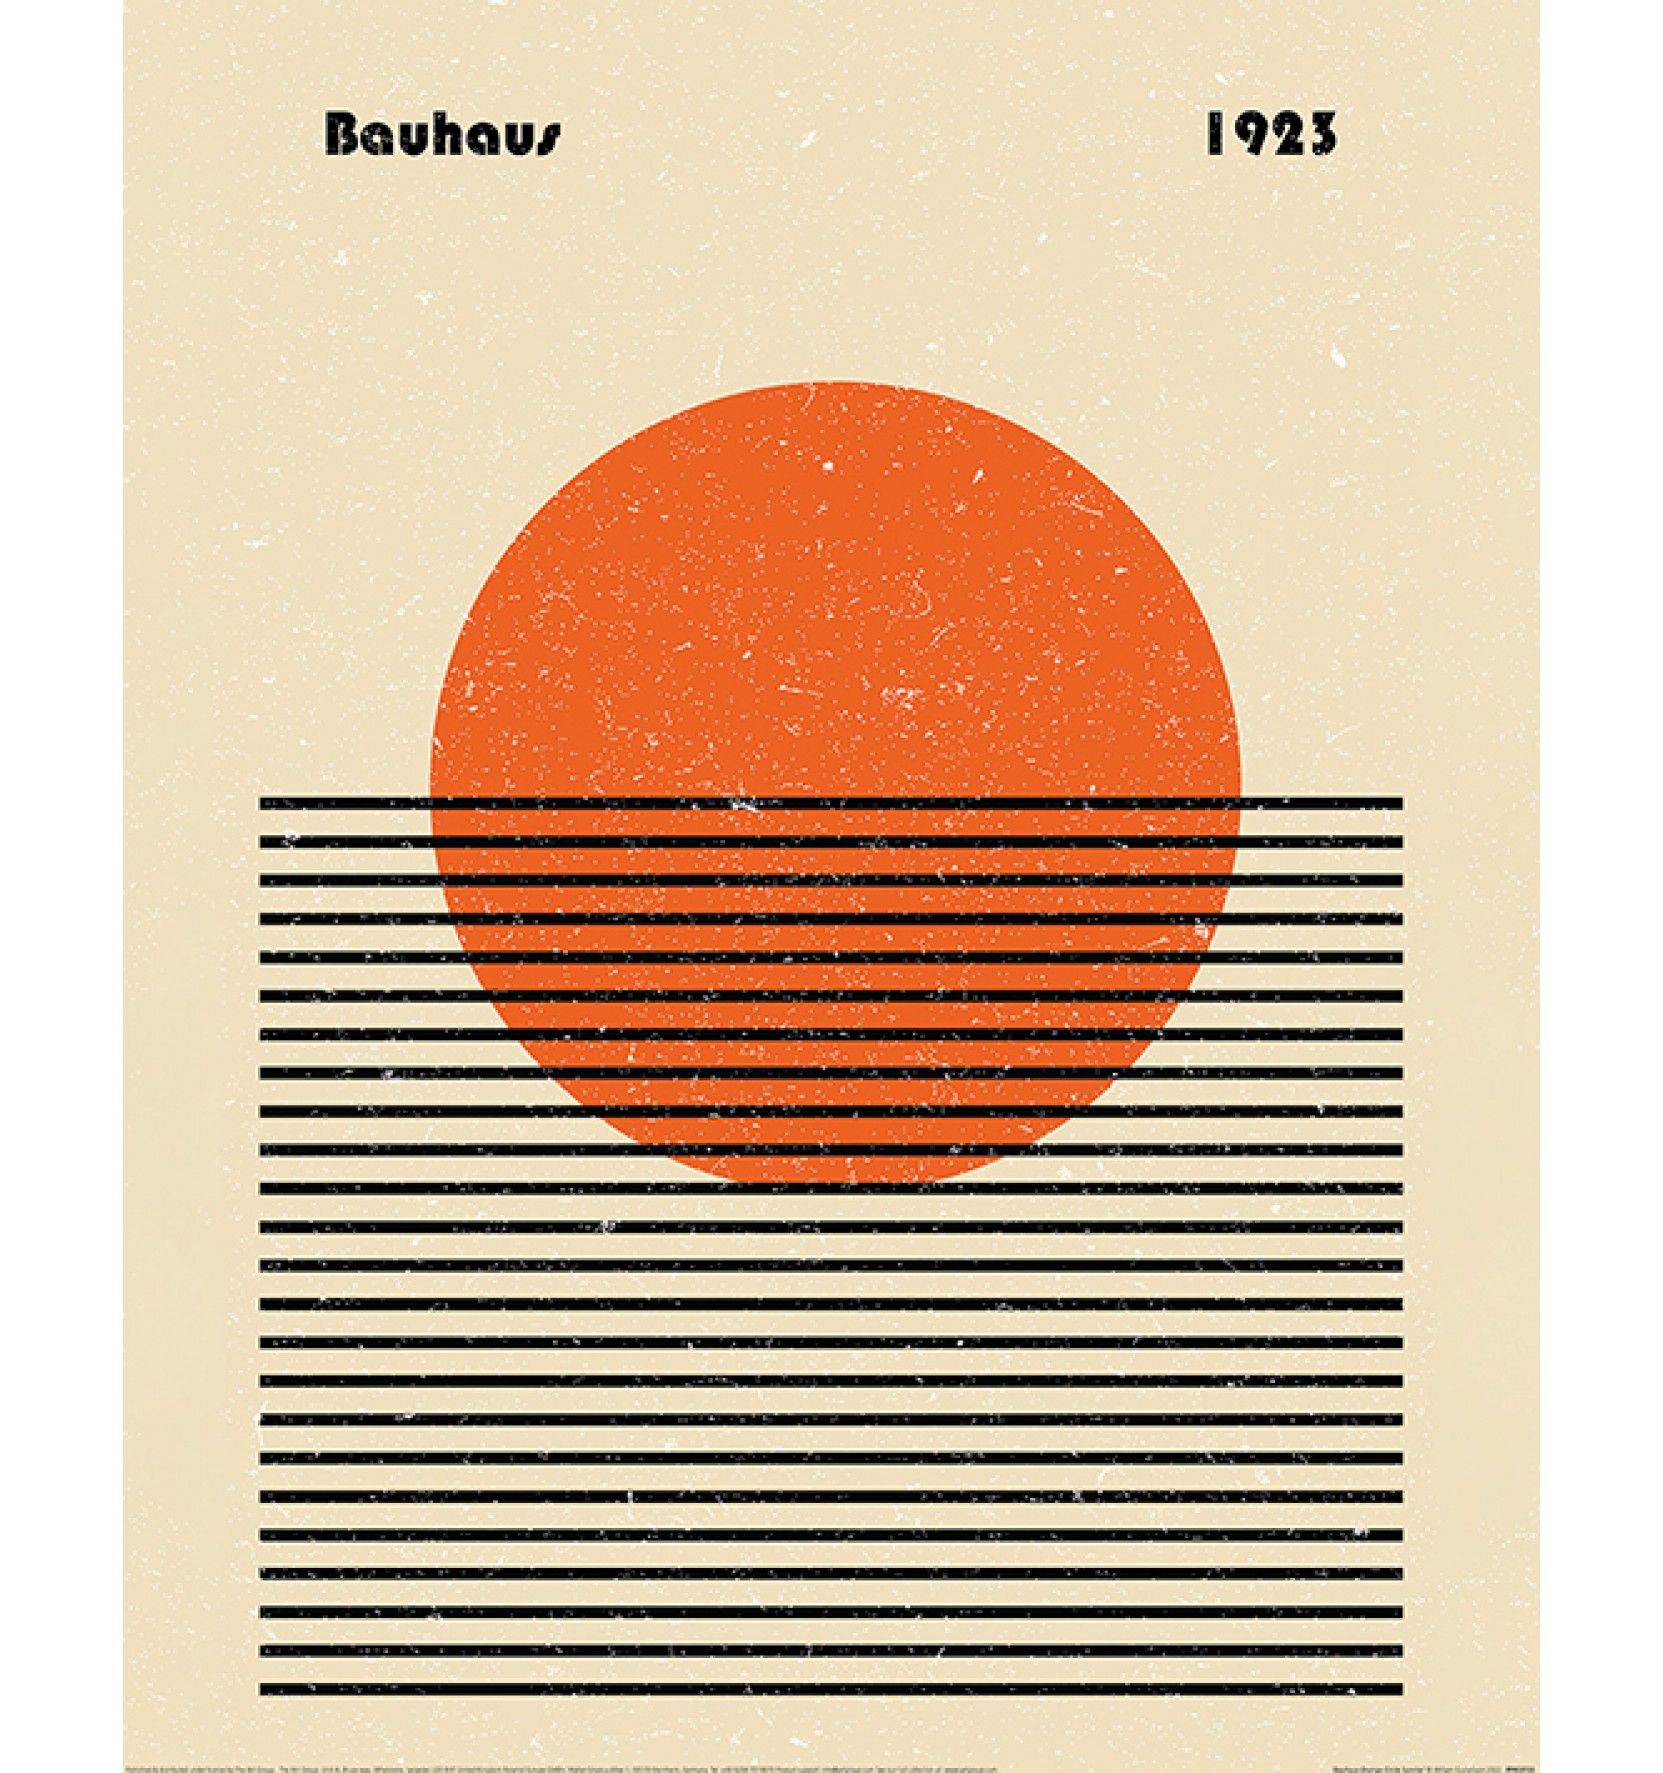 Bauhaus Orange Circle Sunrise by William Gustafsson